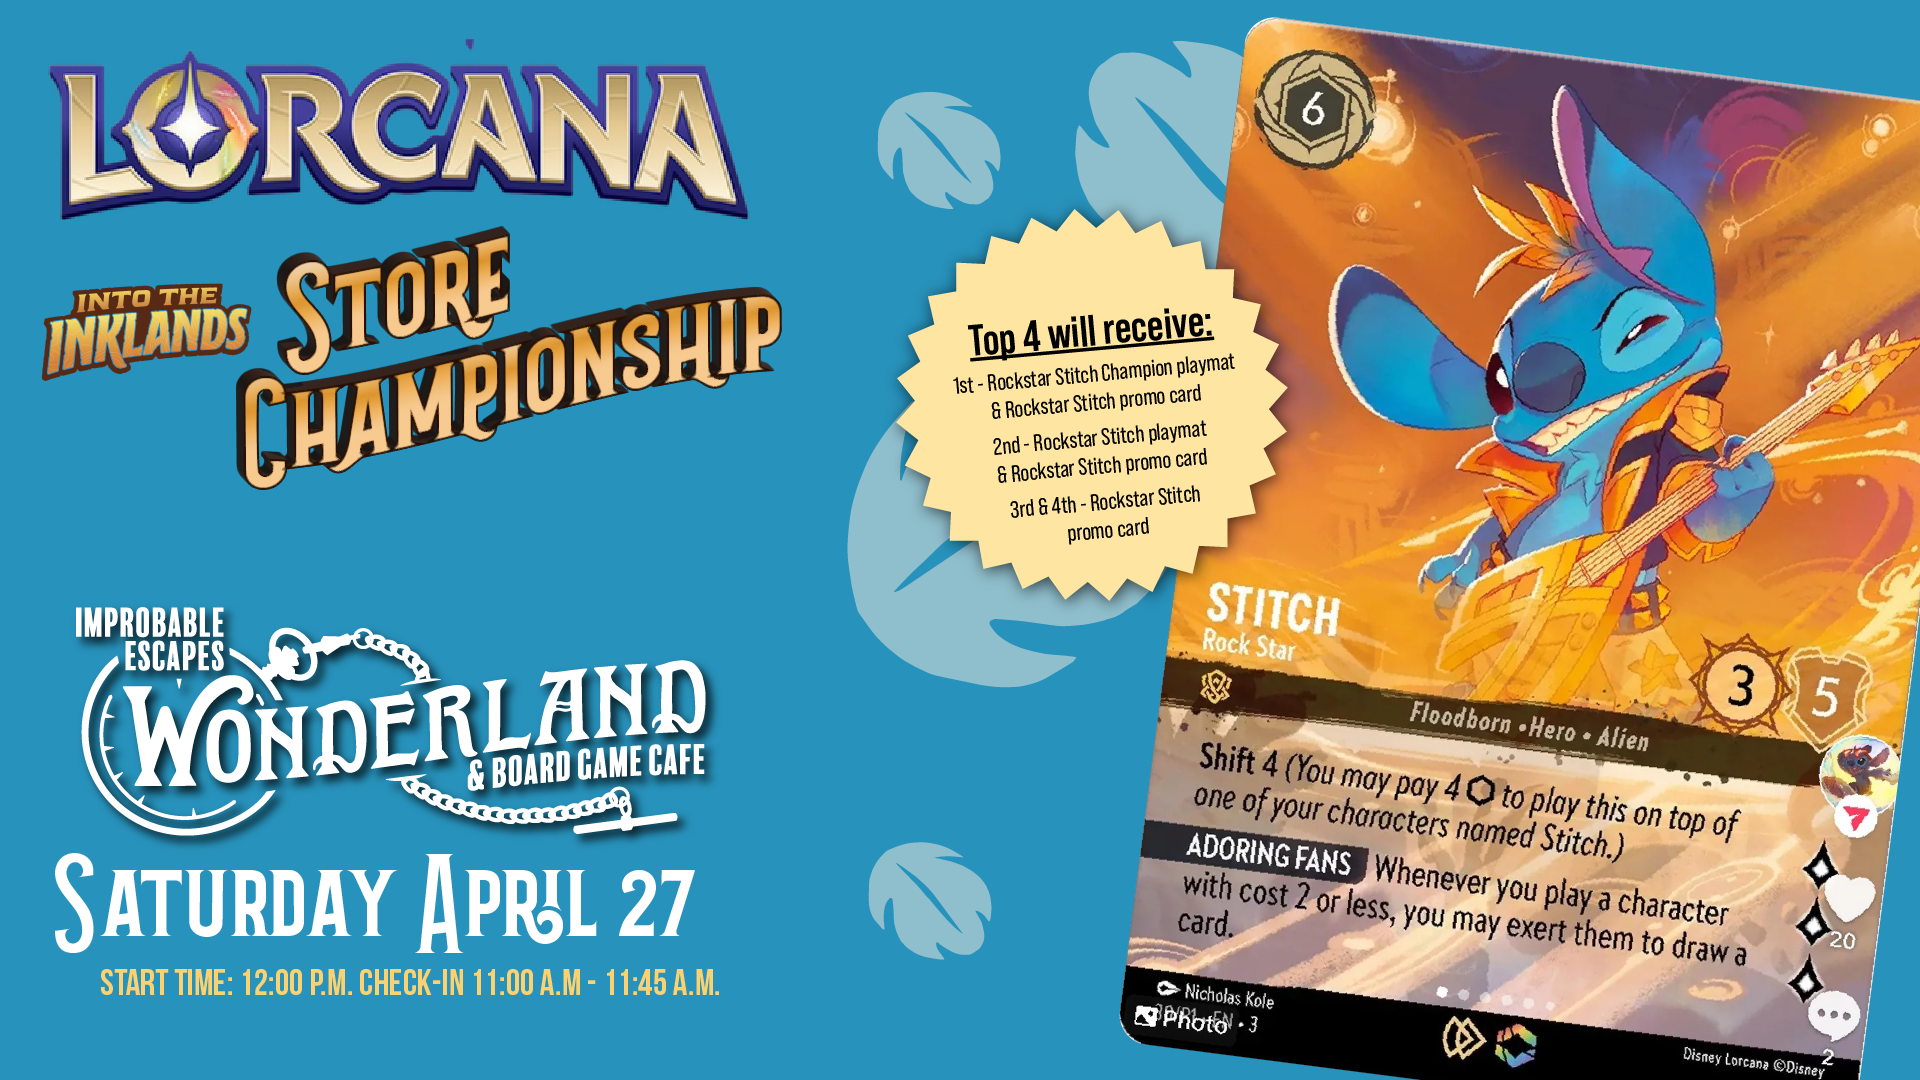 Disney Lorcana: Into the Inklands - Store Championship